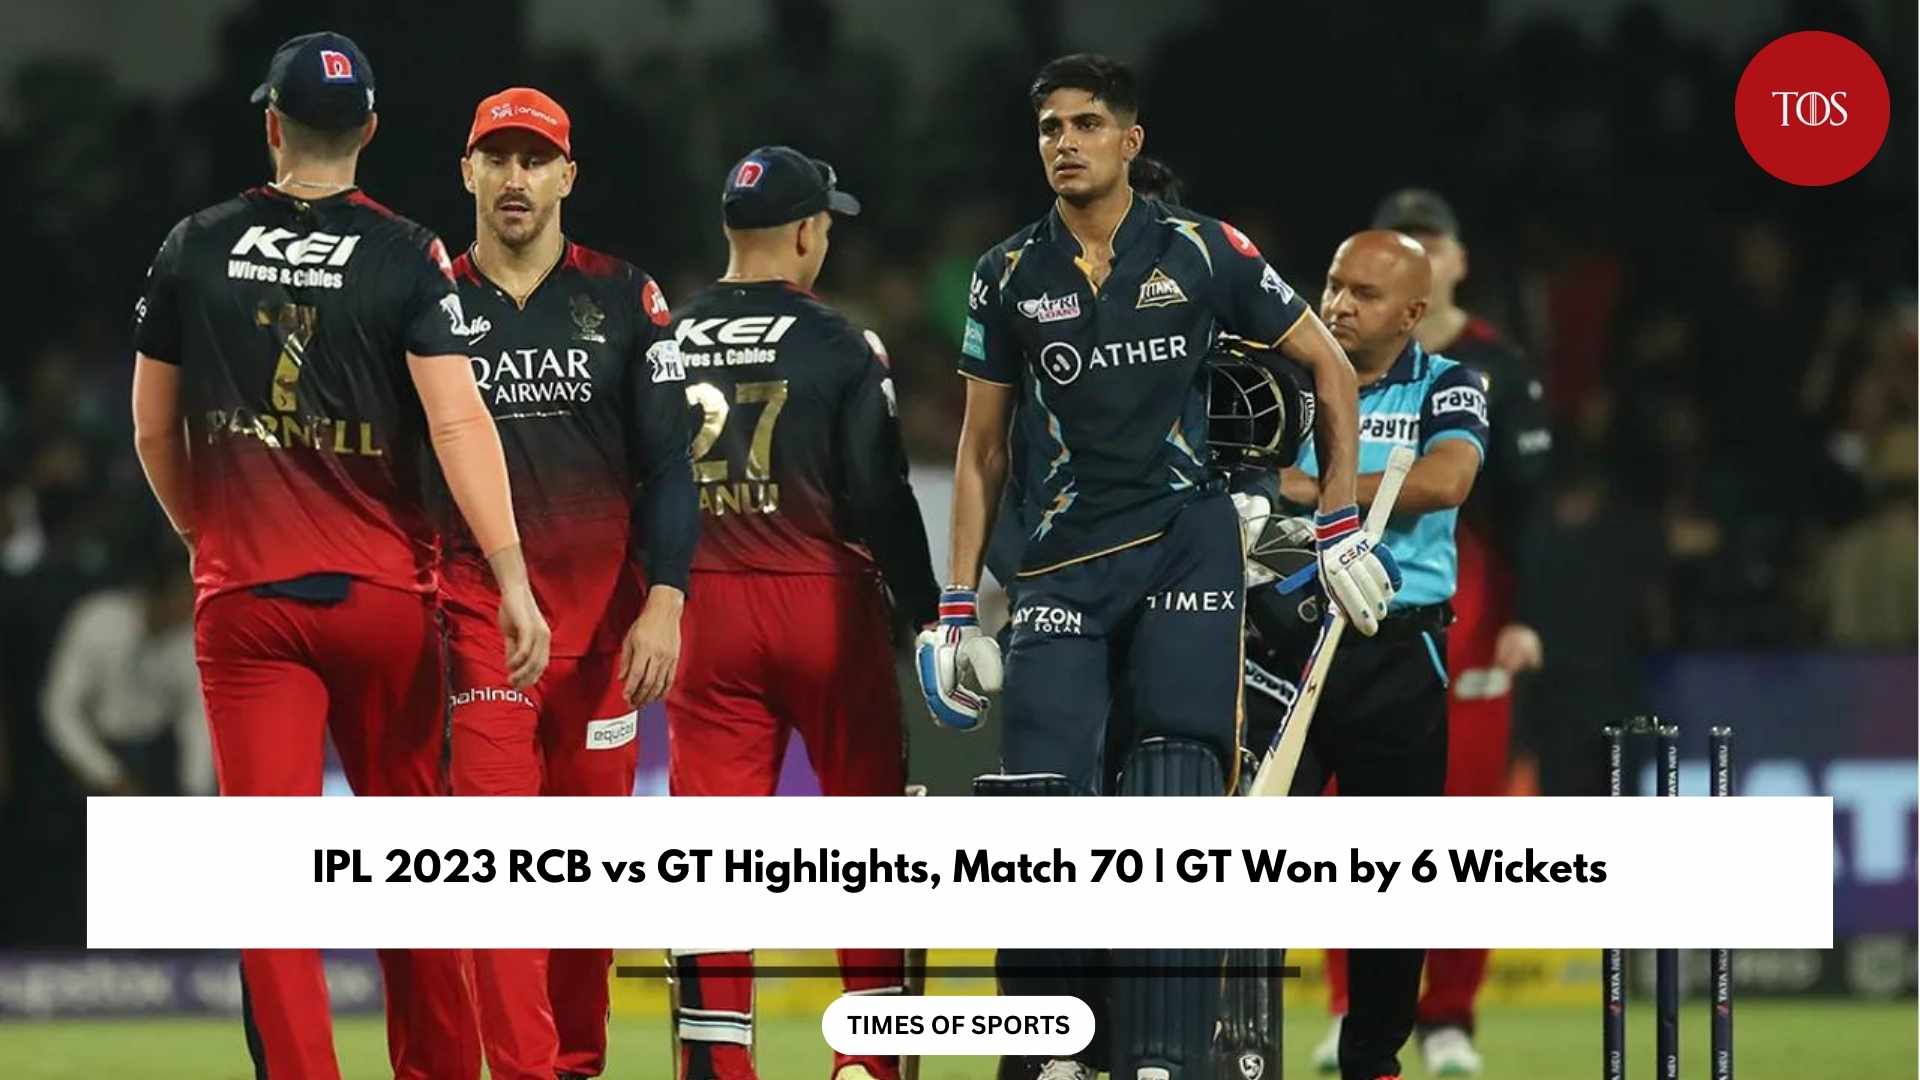 IPL 2023 RCB vs GT Highlights, Match 70 GT Won by 6 Wickets